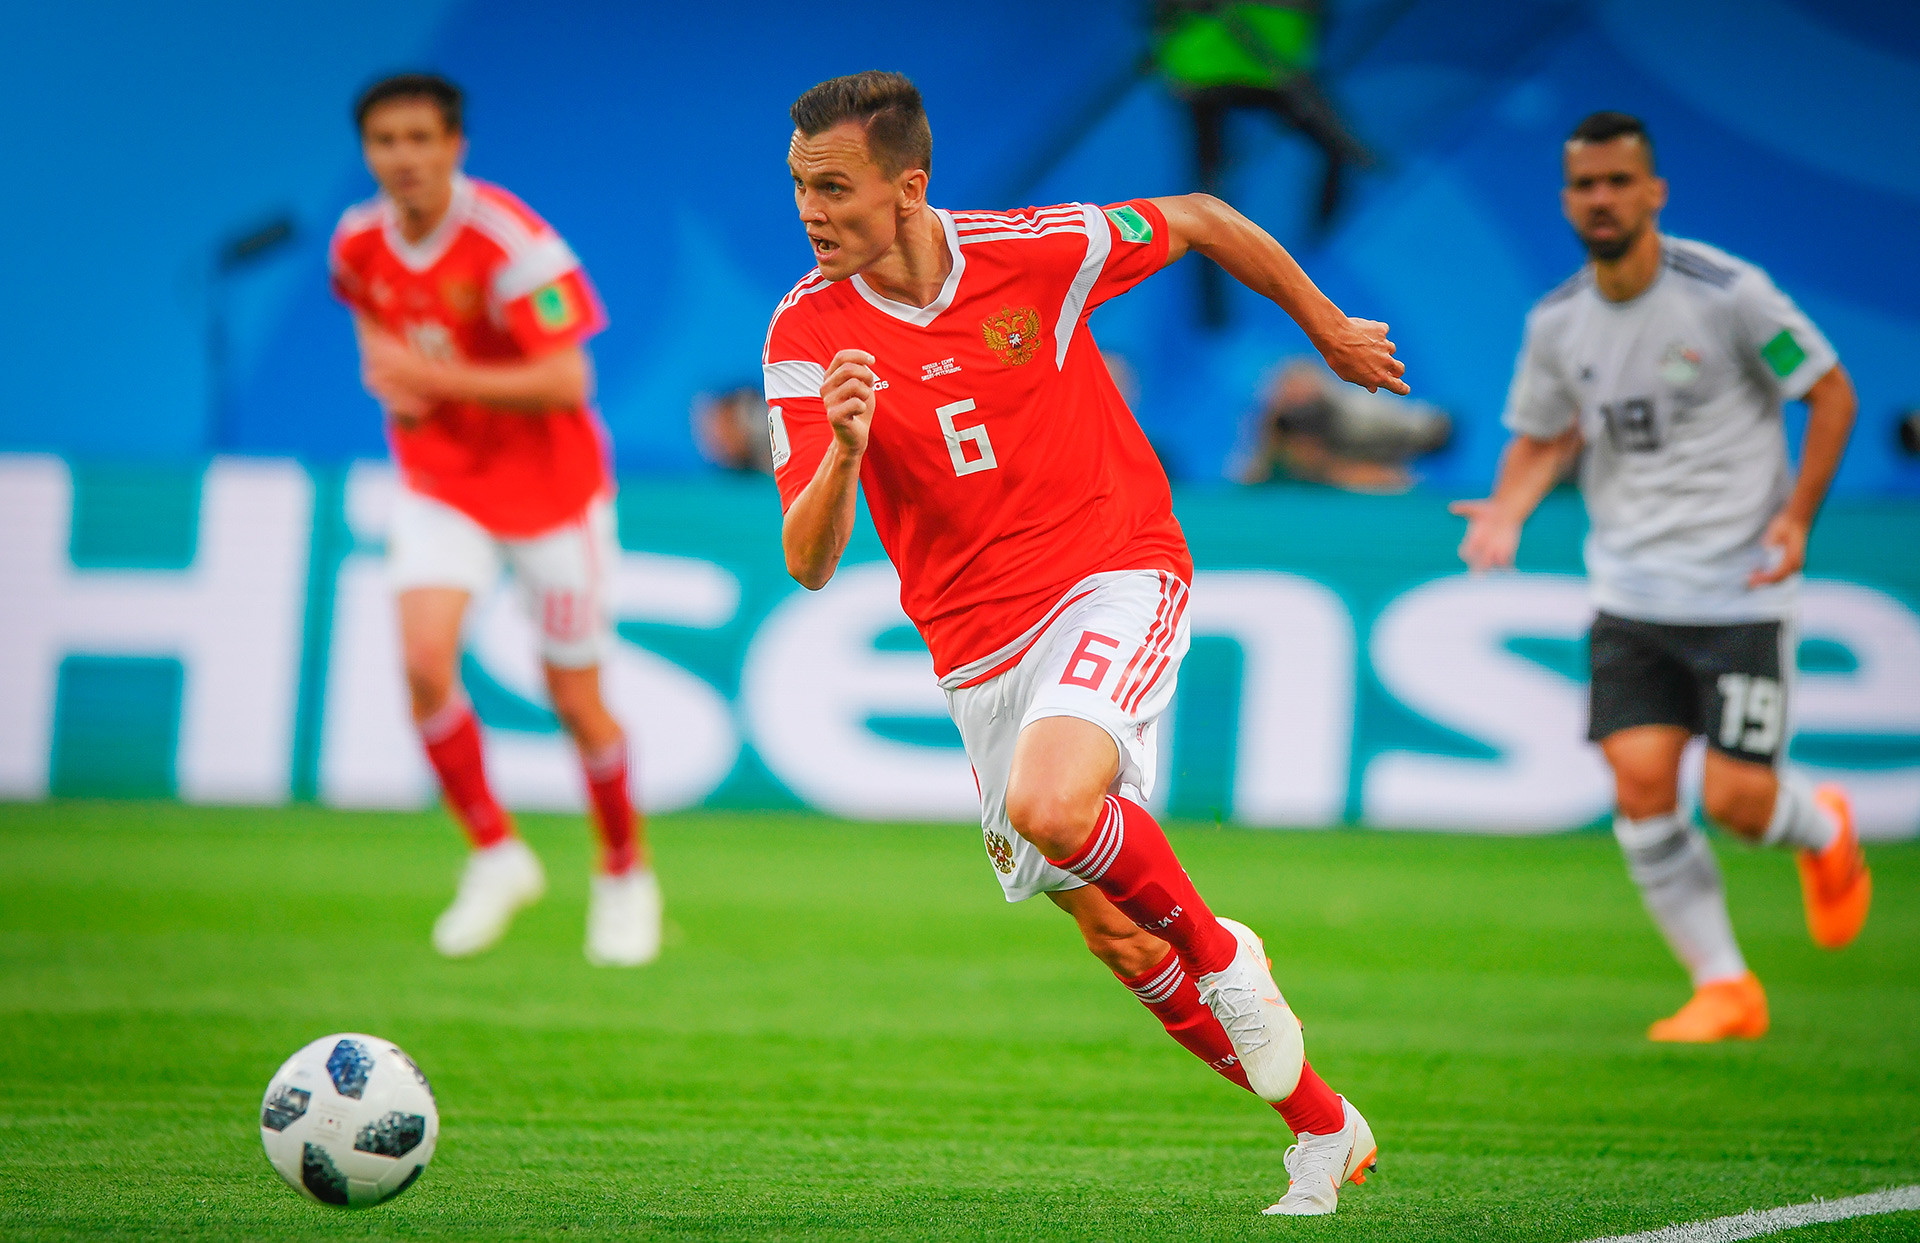 Denis Cheryshev, Team Russia's best striker on the tournament. He scored in matches against Saudi Arabia (twice), Egypt, and Croatia.